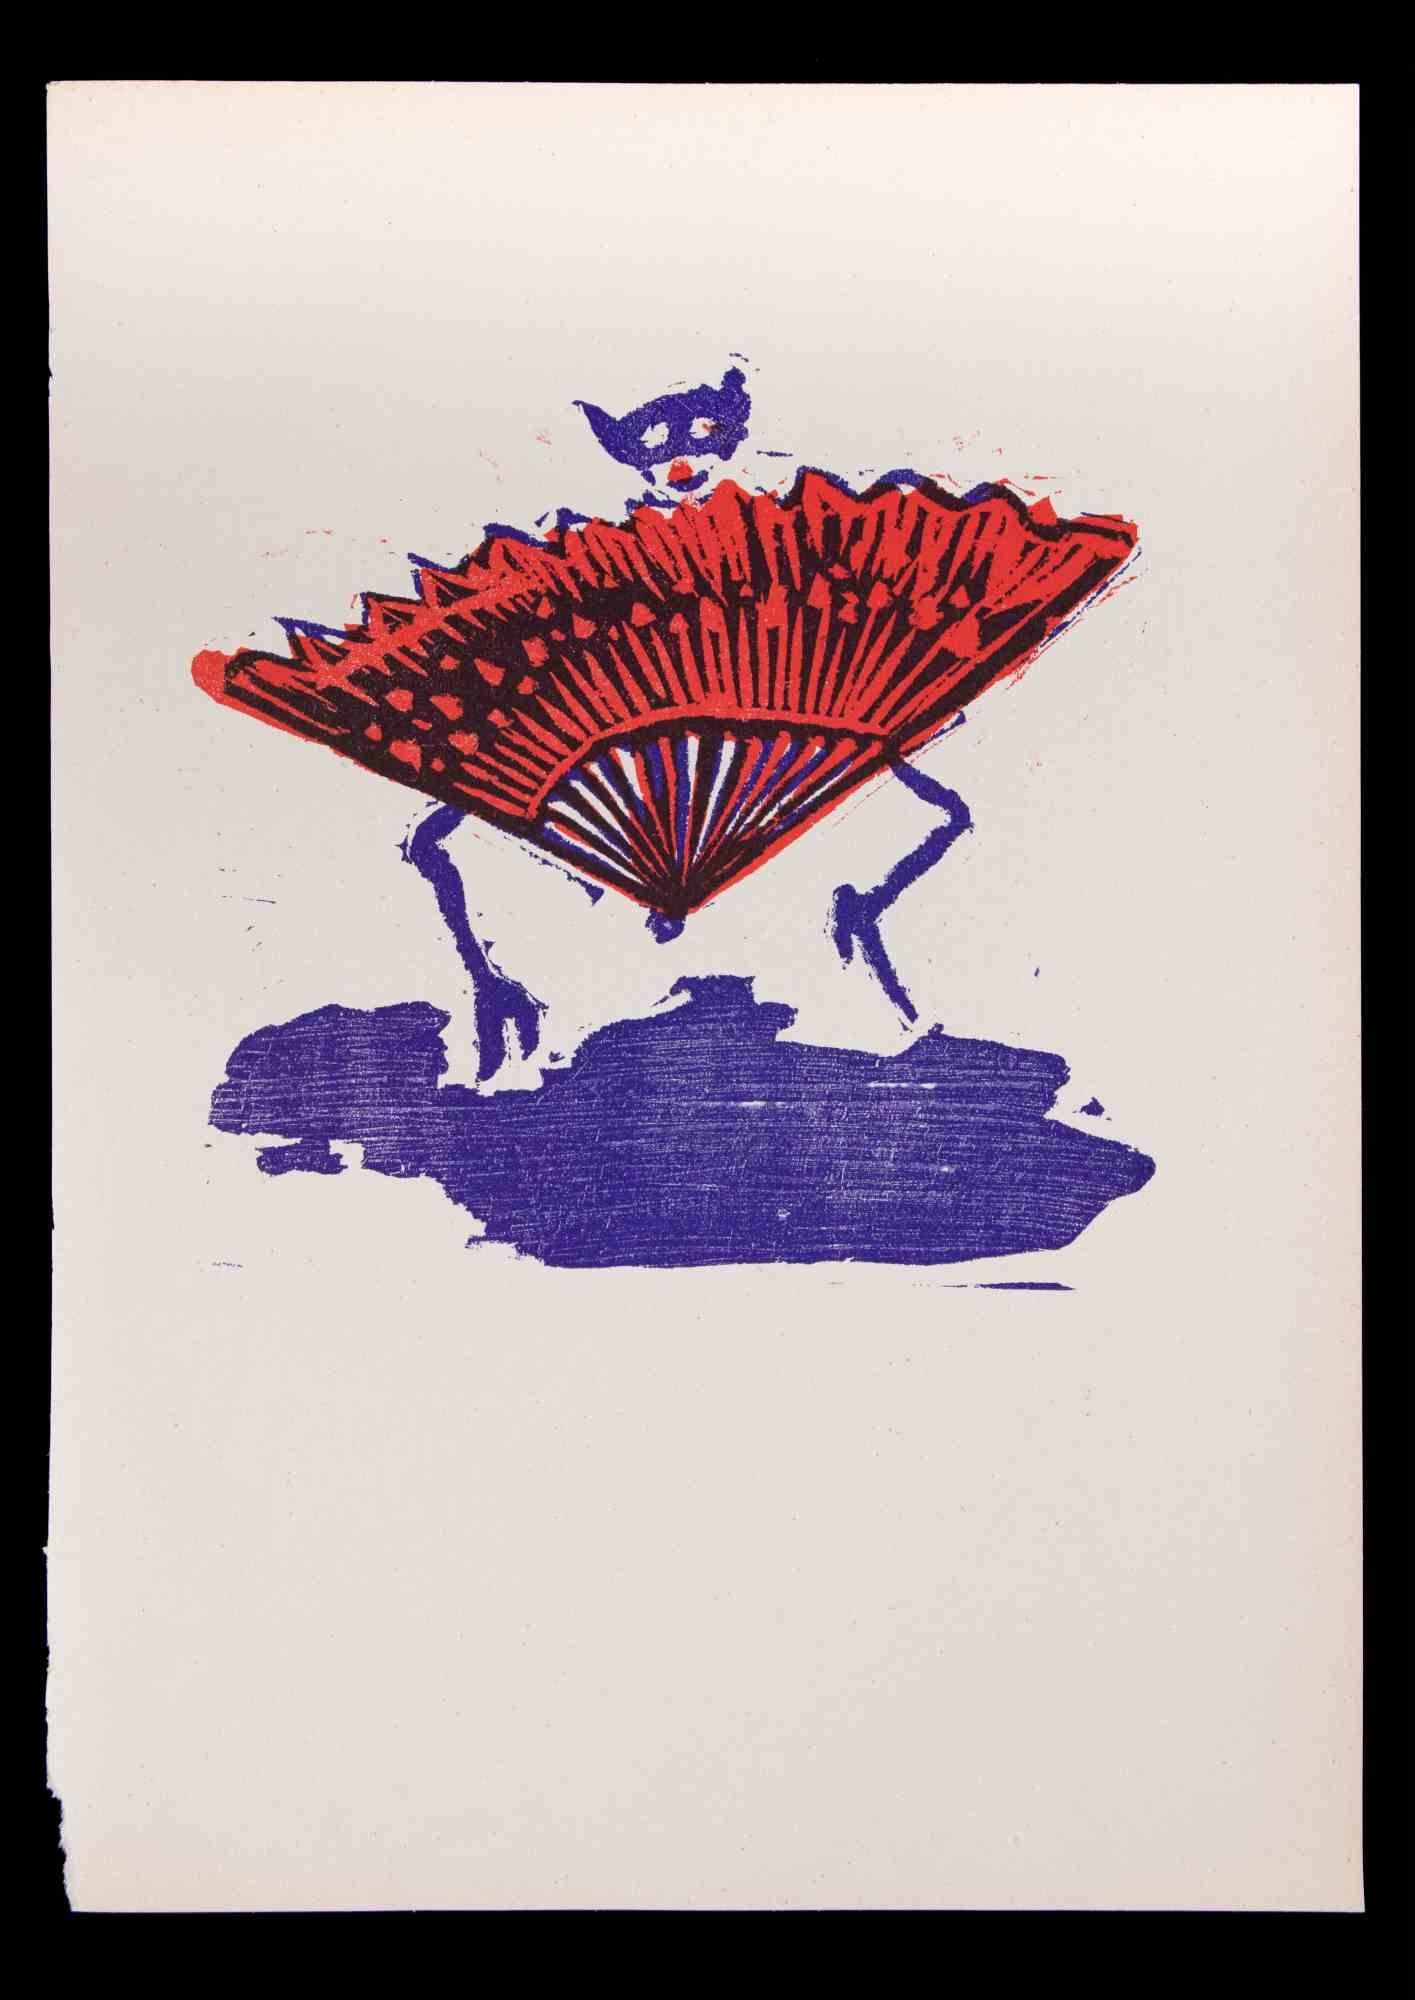 The Fan - Original Linocut by Mino Maccari - 1951